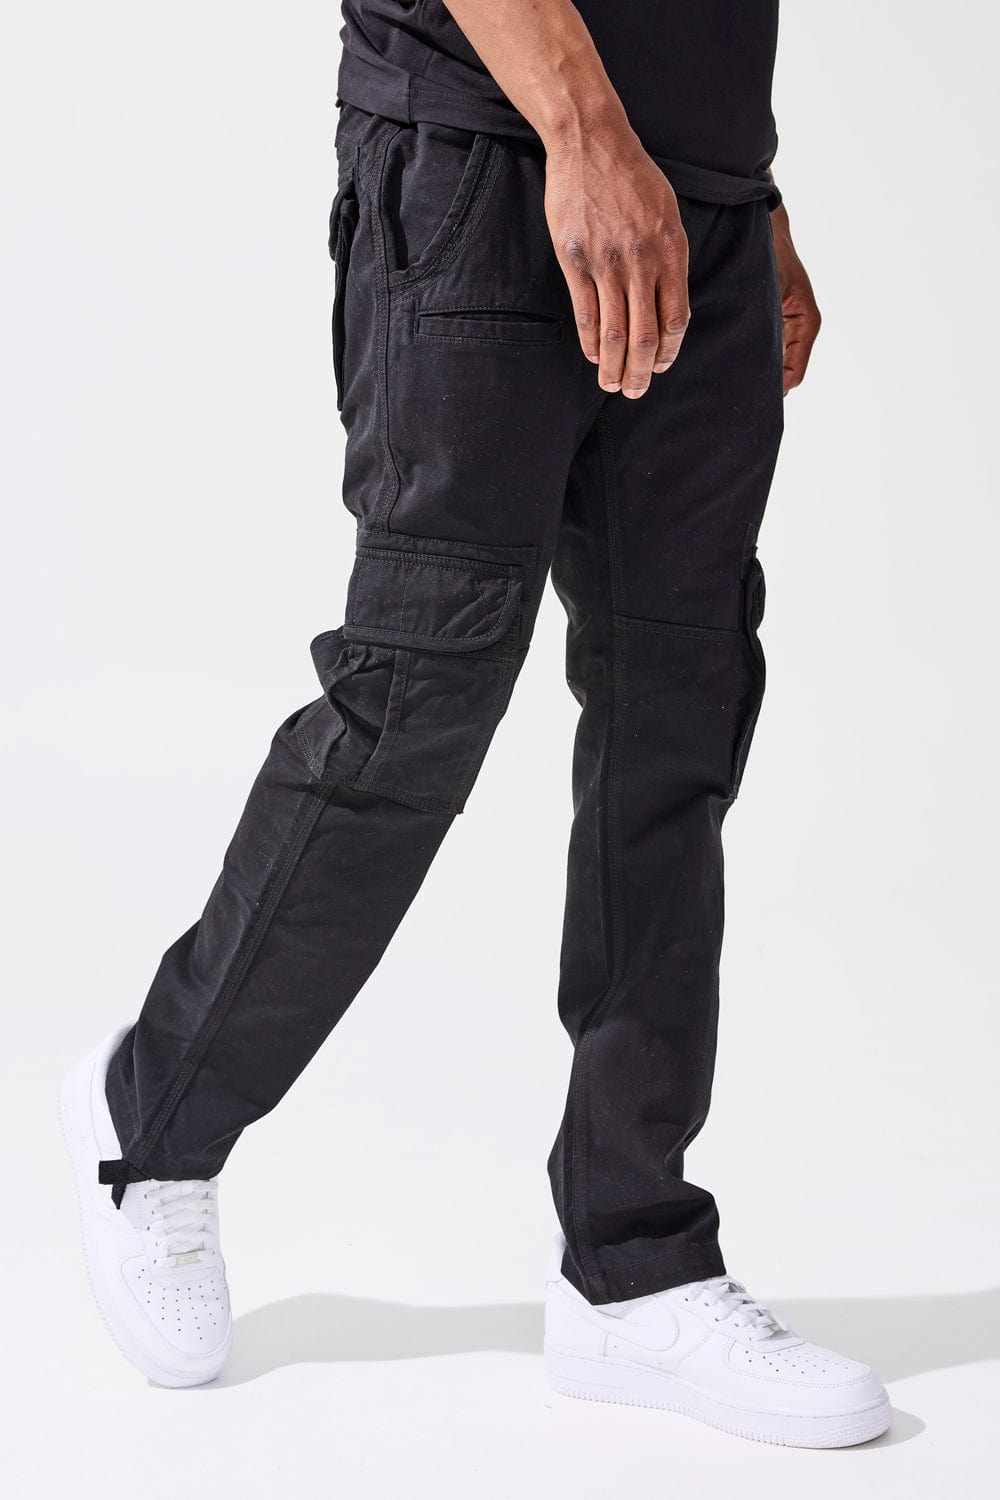 Xavier - OG Cargo Pants (Black) – Jordan Craig